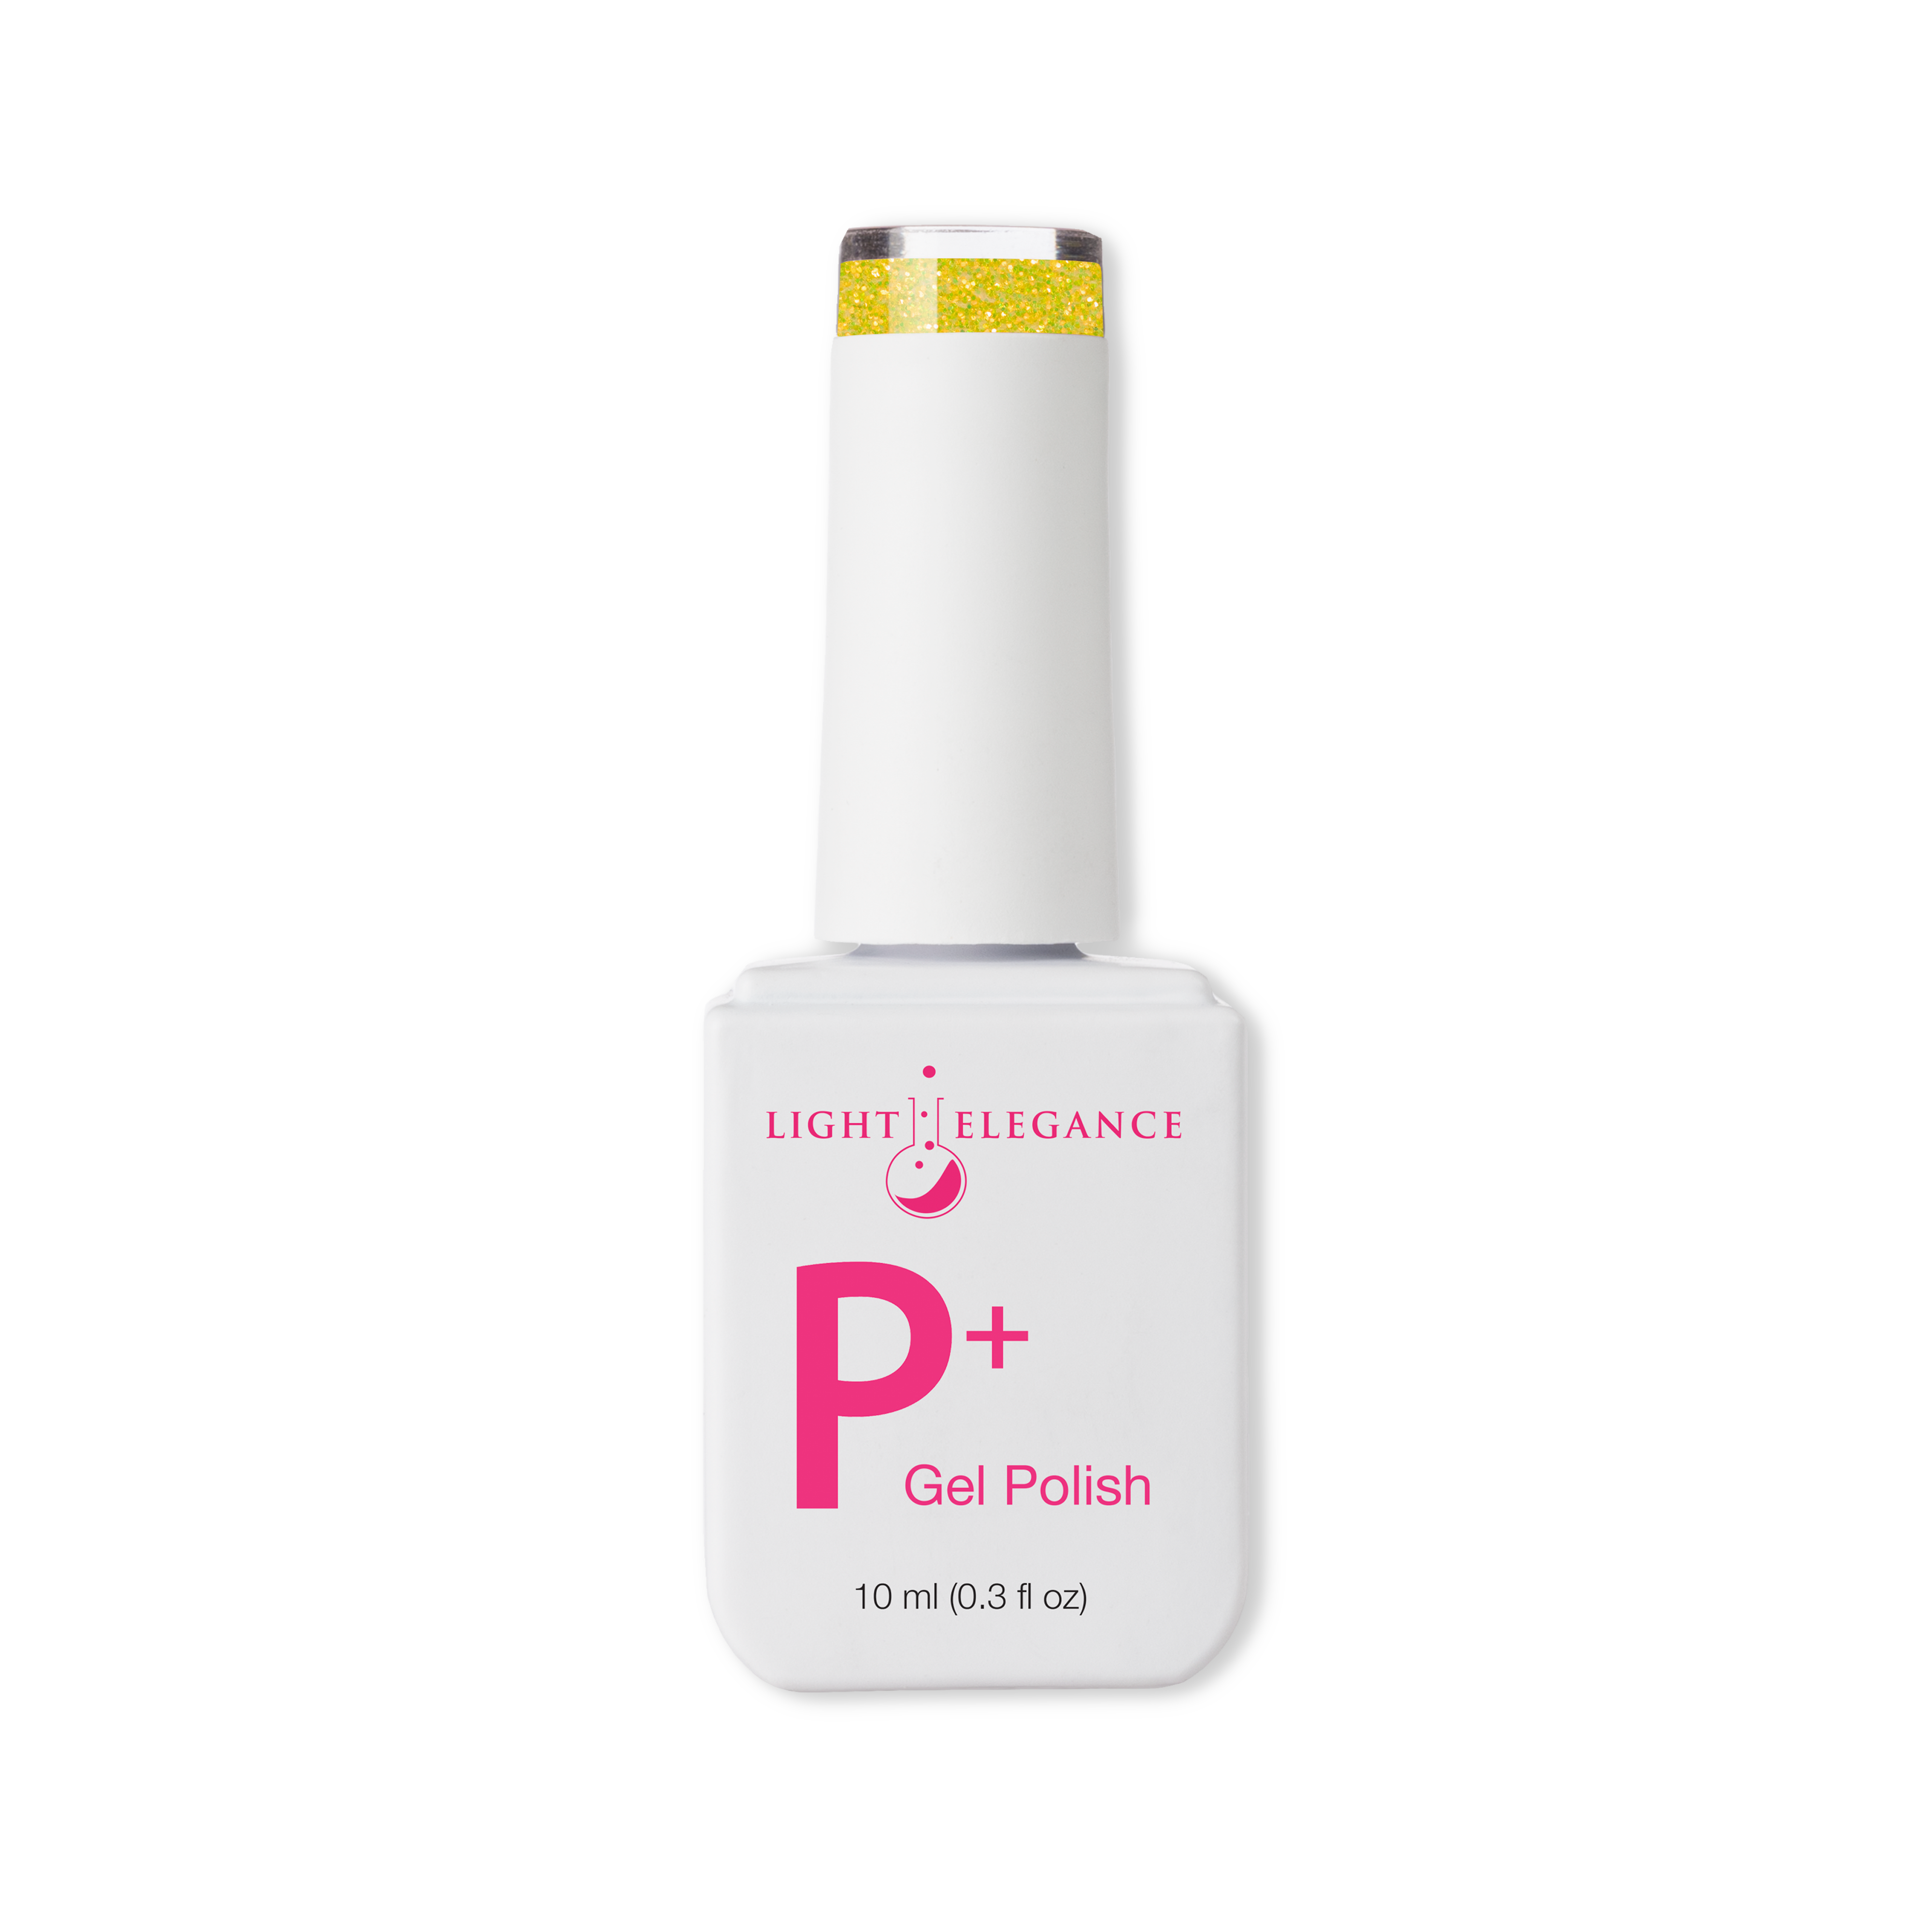 Light Elegance P+ Soak Off Glitter Gel - Good Vibrations :: New Packaging - Creata Beauty - Professional Beauty Products